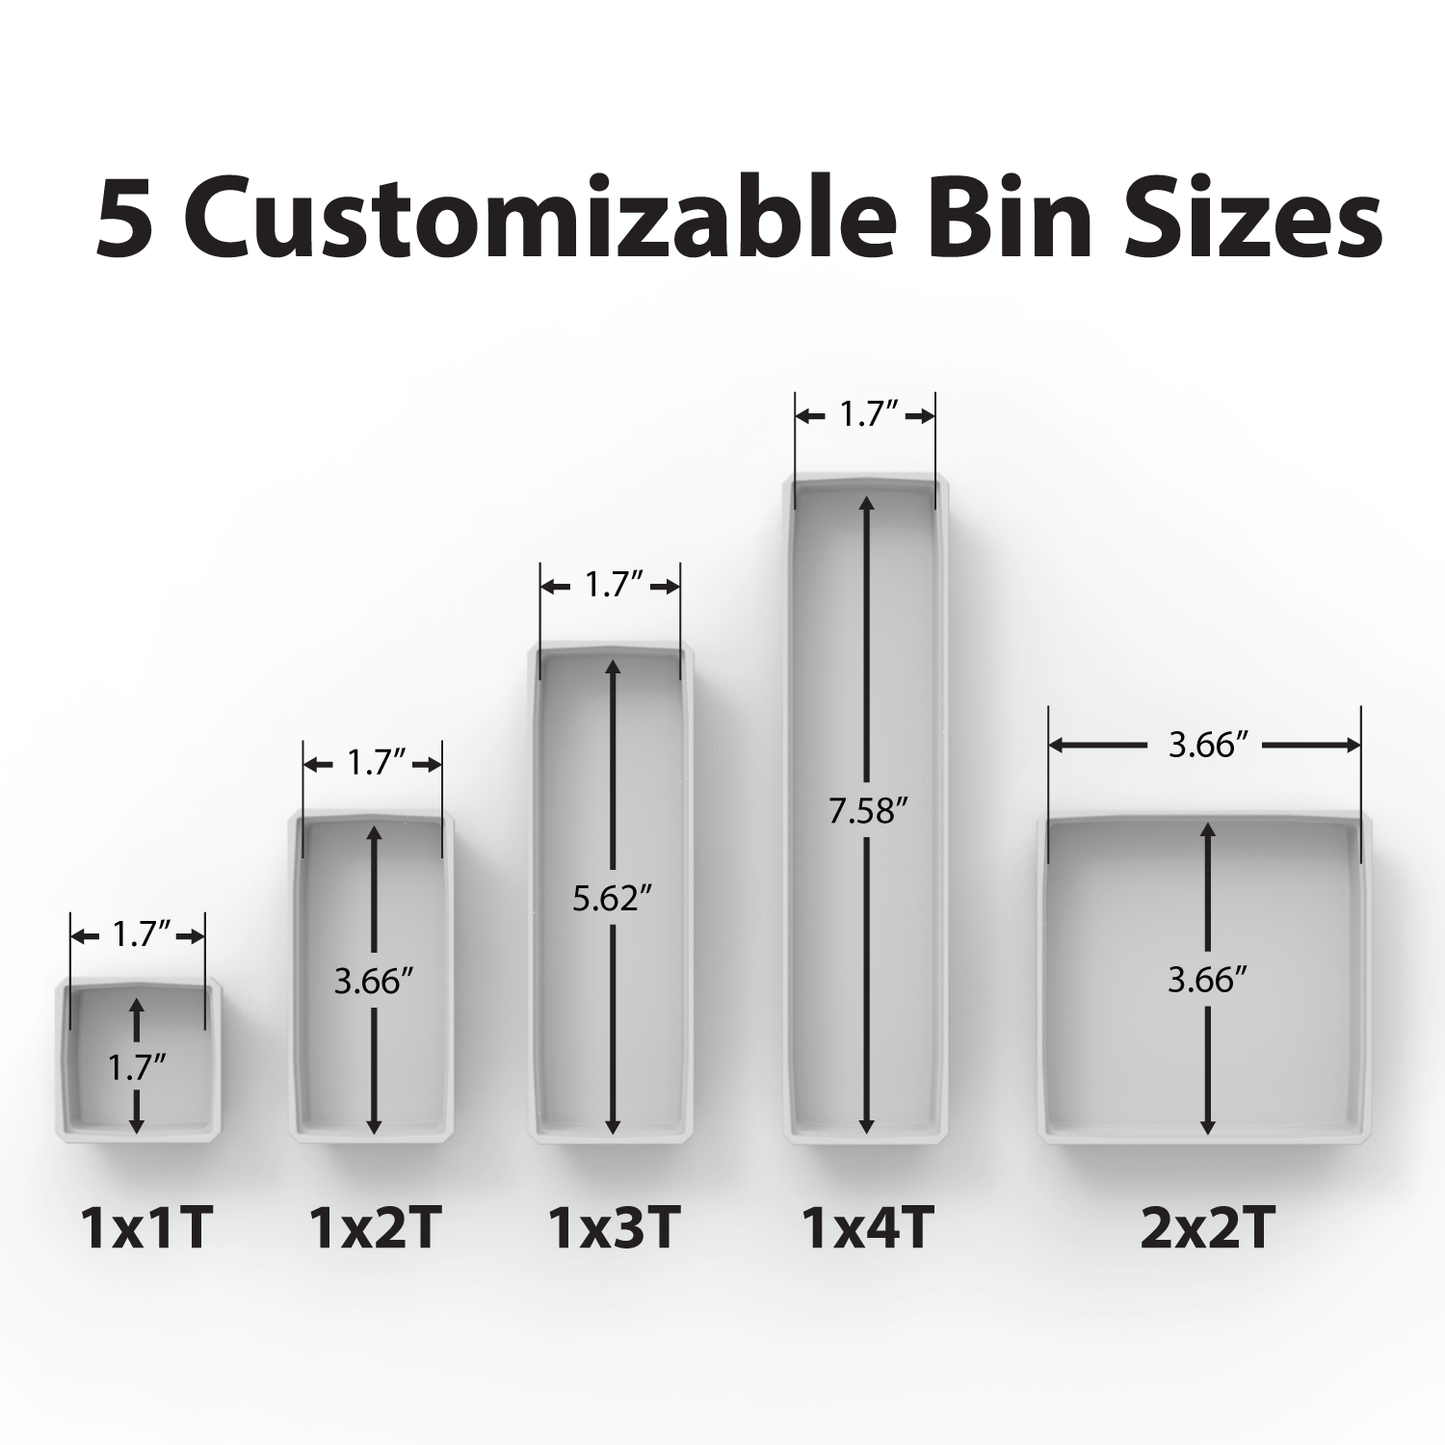 2 Customizable 1x3T (Thin) Bins